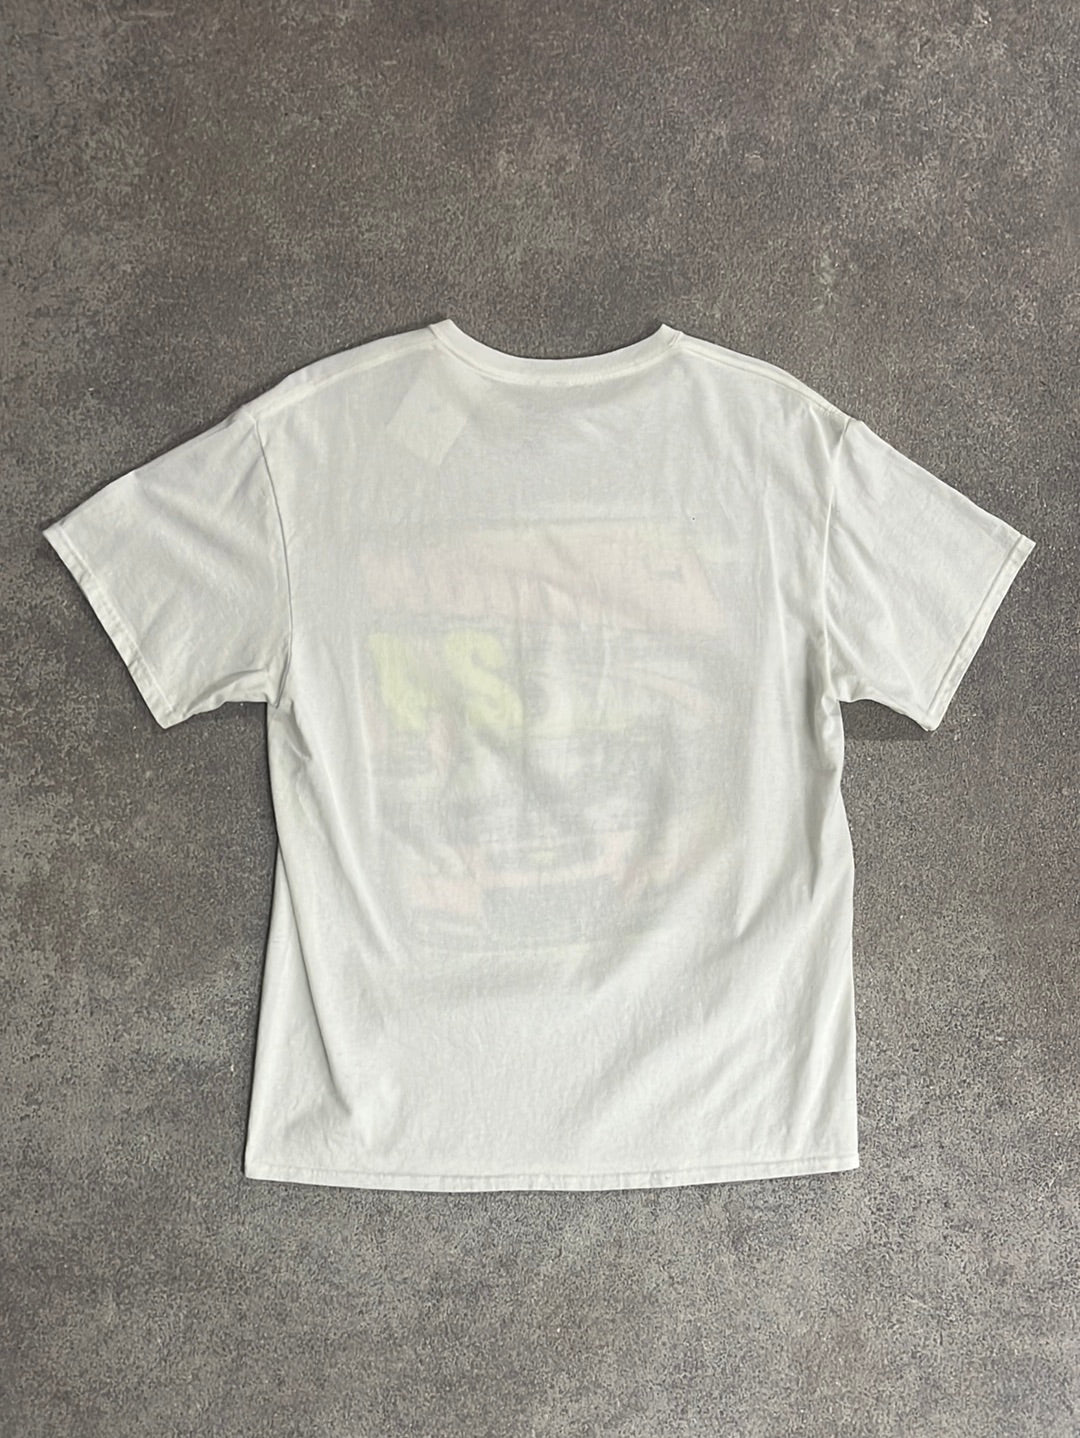 Vintage Gordon Nascar Tshirt White // Small - RHAGHOUSE VINTAGE